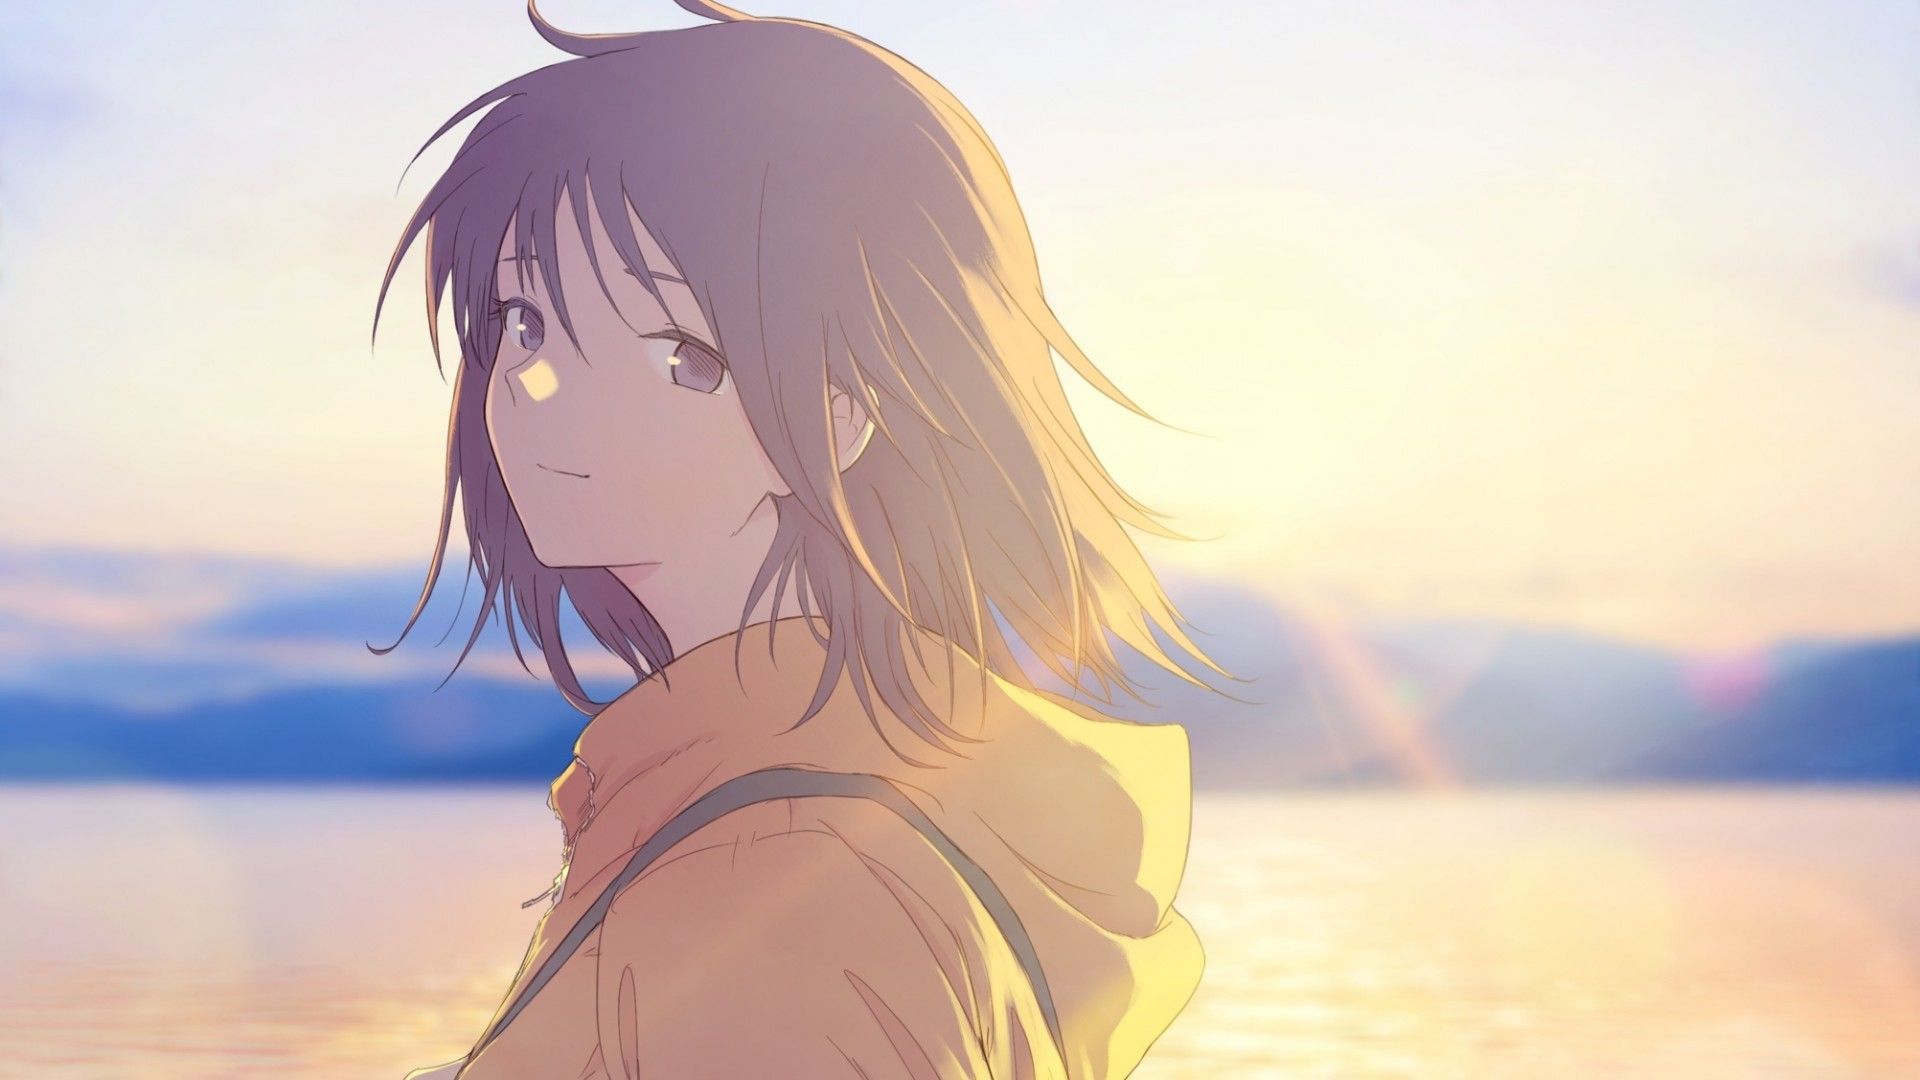 Download 1920x1080 Anime Girl, Profile View, Sunlight, Sea, Beach, Walking, Hoodie Wallpaper for Widescreen